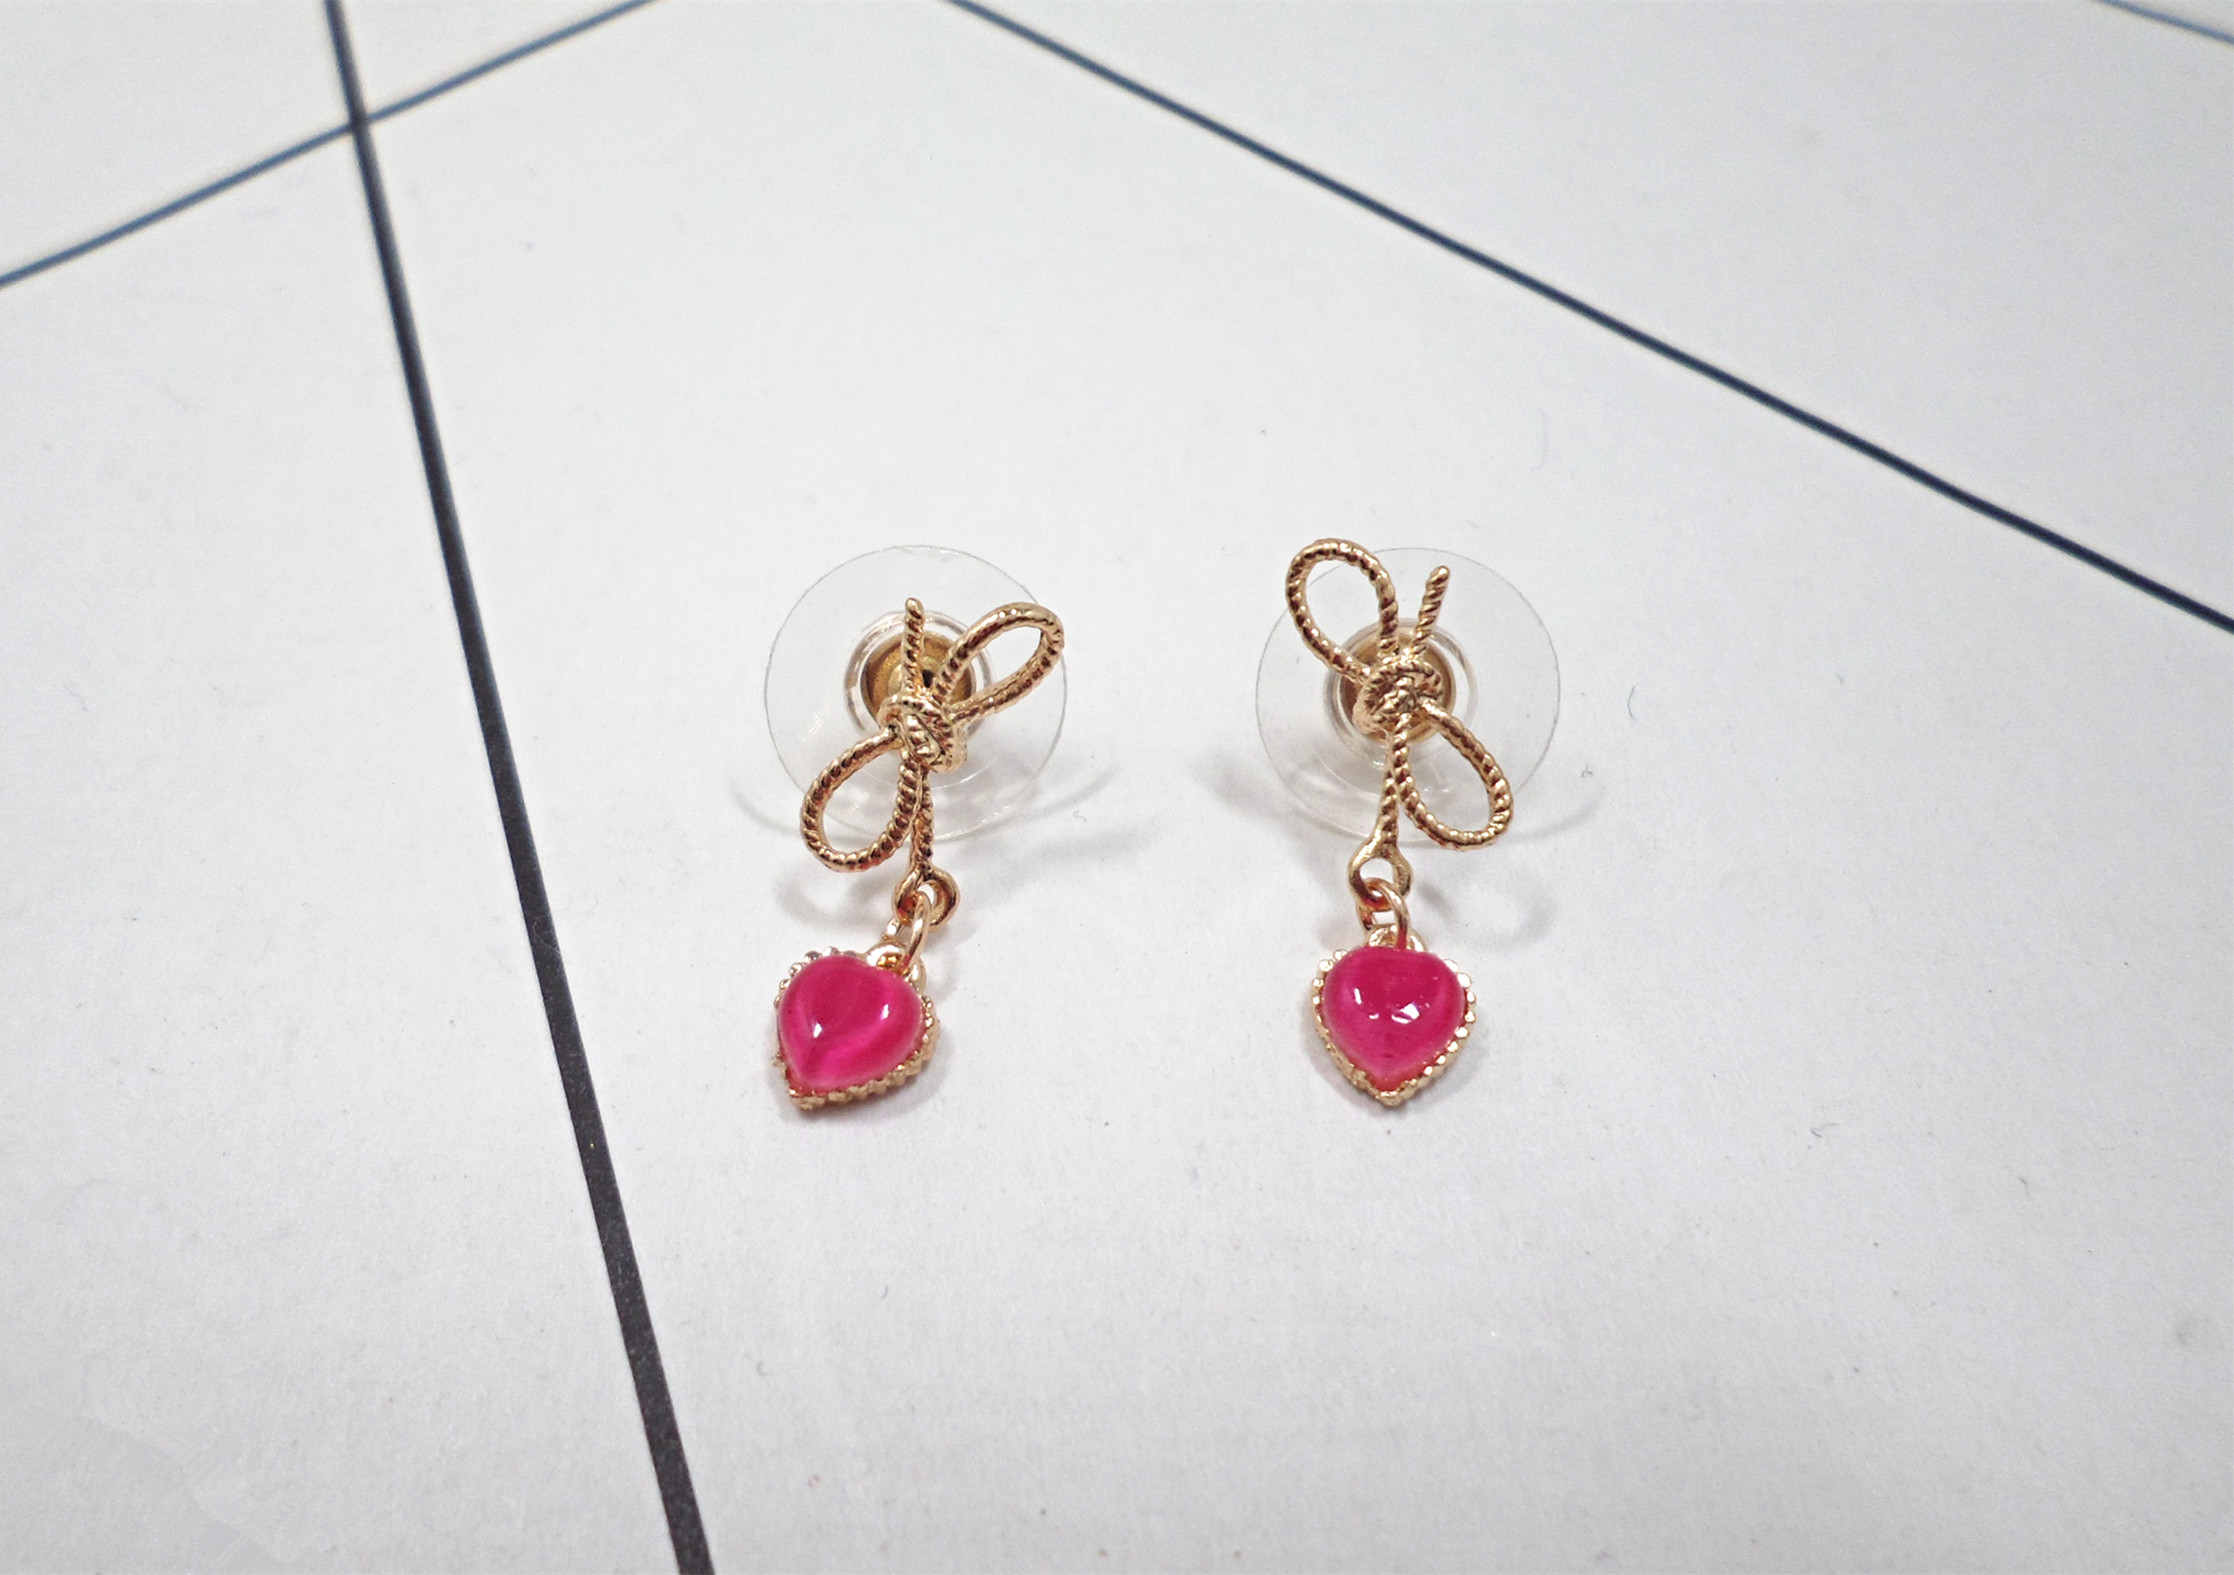 Wholesale Bowknot Heart Earrings for Women Girl Elegant Gold Color Alloy Shiny crystal Earrings Wedding Jewelry VGE135 3